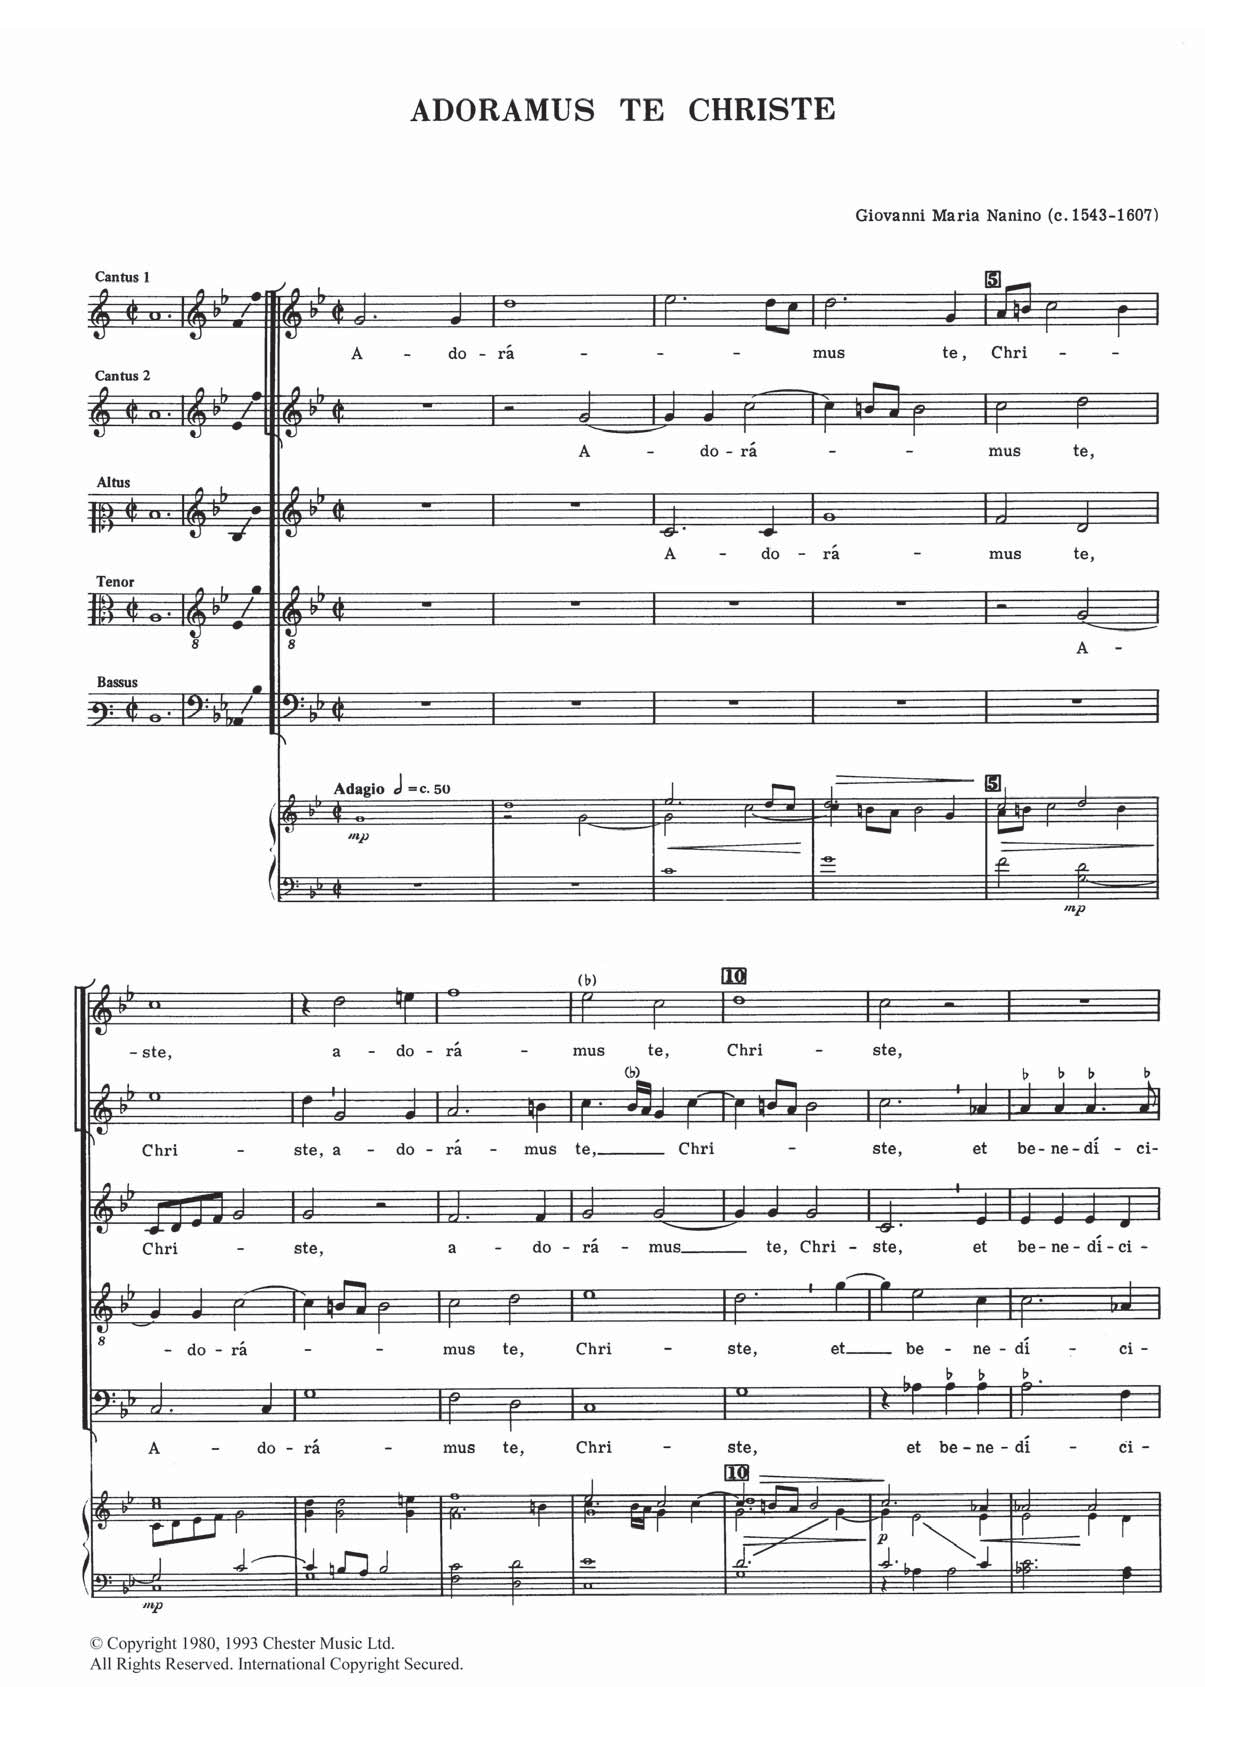 Giovanni Maria Nanino Adoramus Te Christe sheet music notes and chords arranged for Piano, Vocal & Guitar Chords